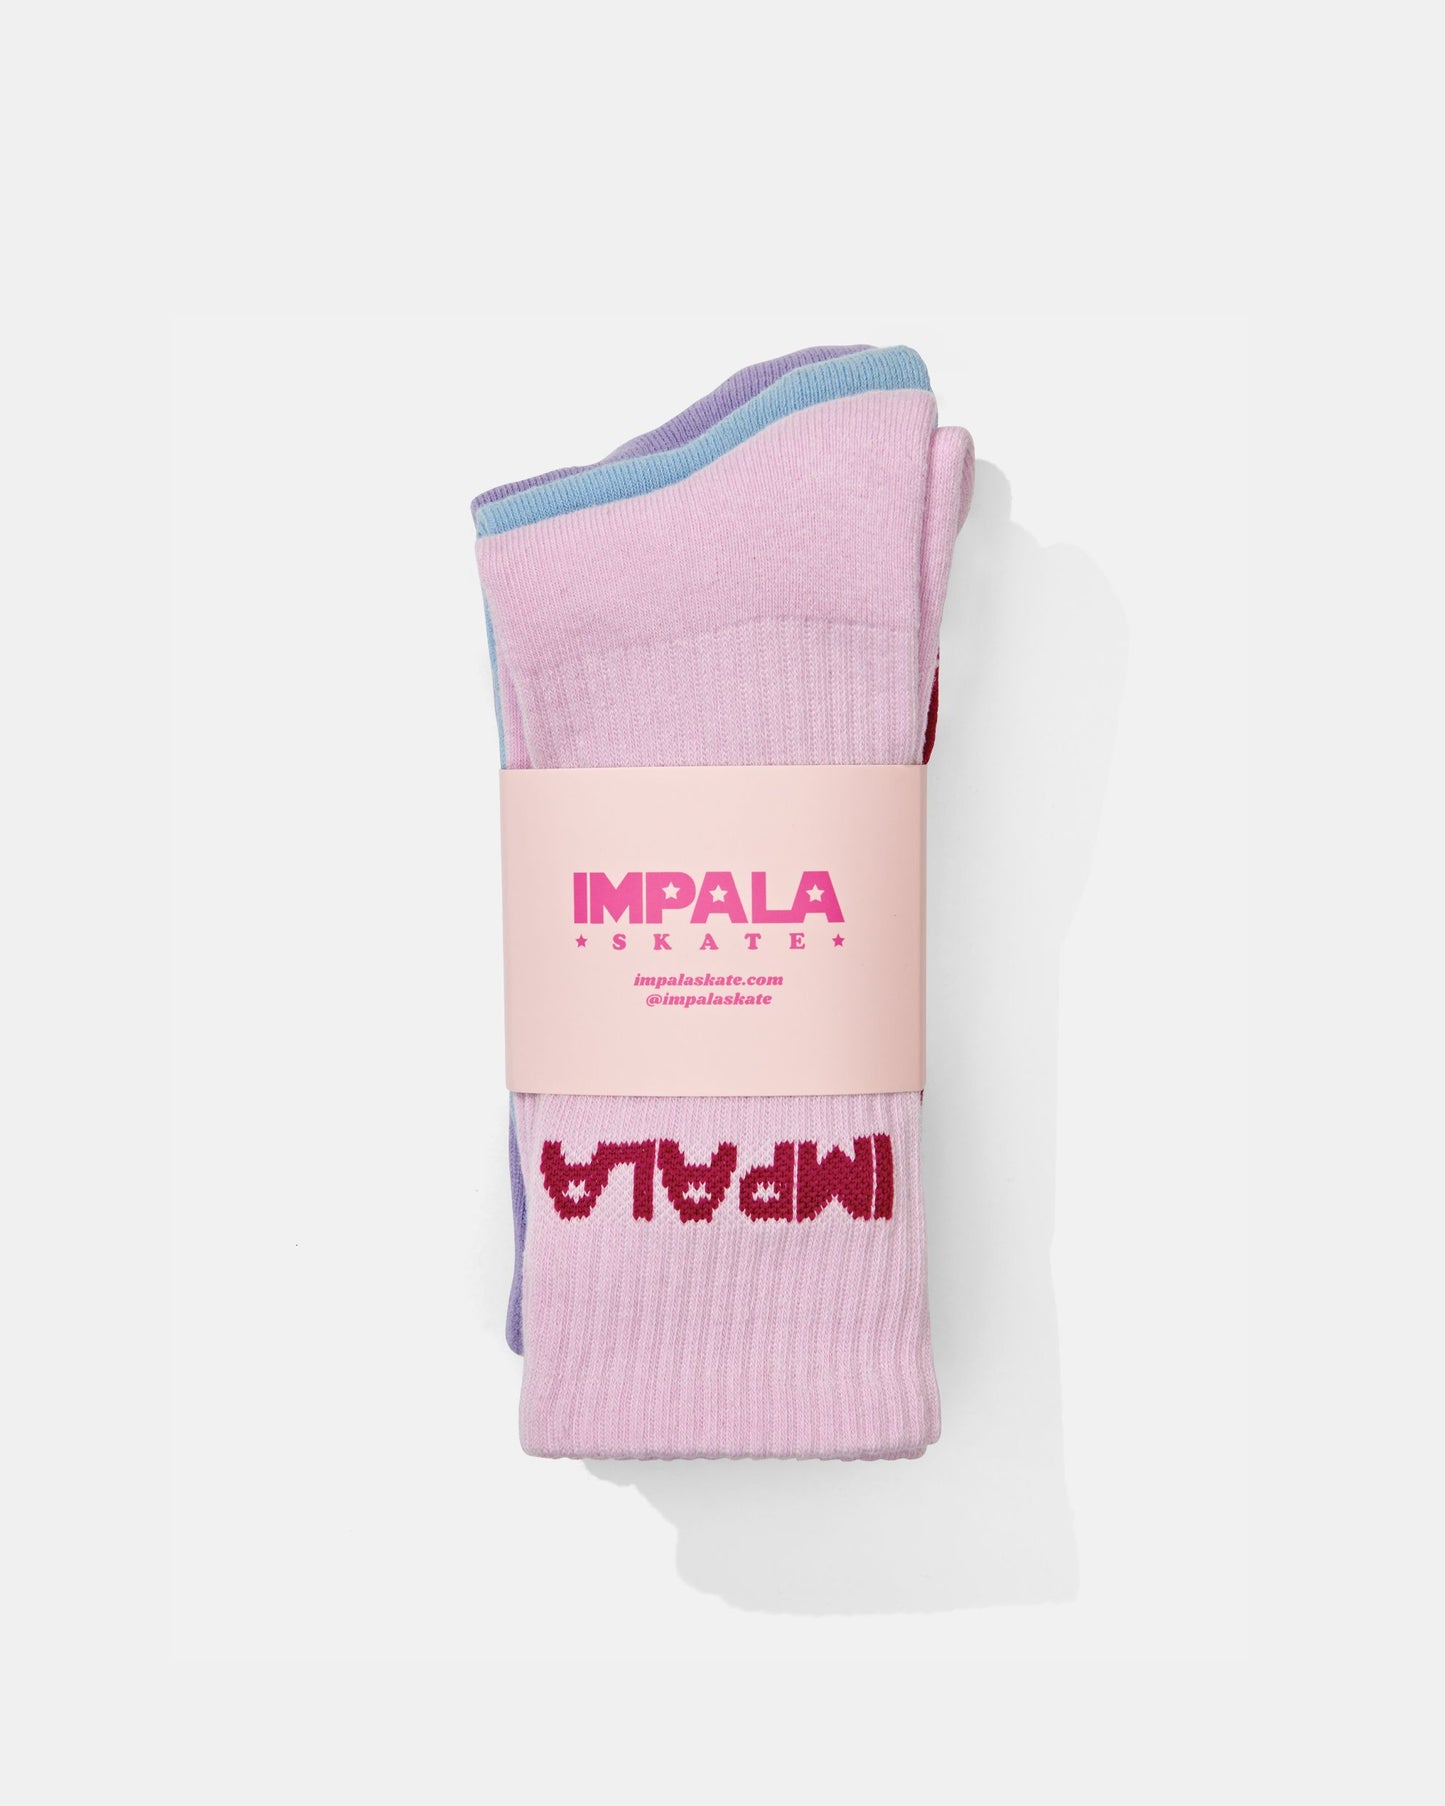 packaged 3 pack of Pastel Impala Skate Socks